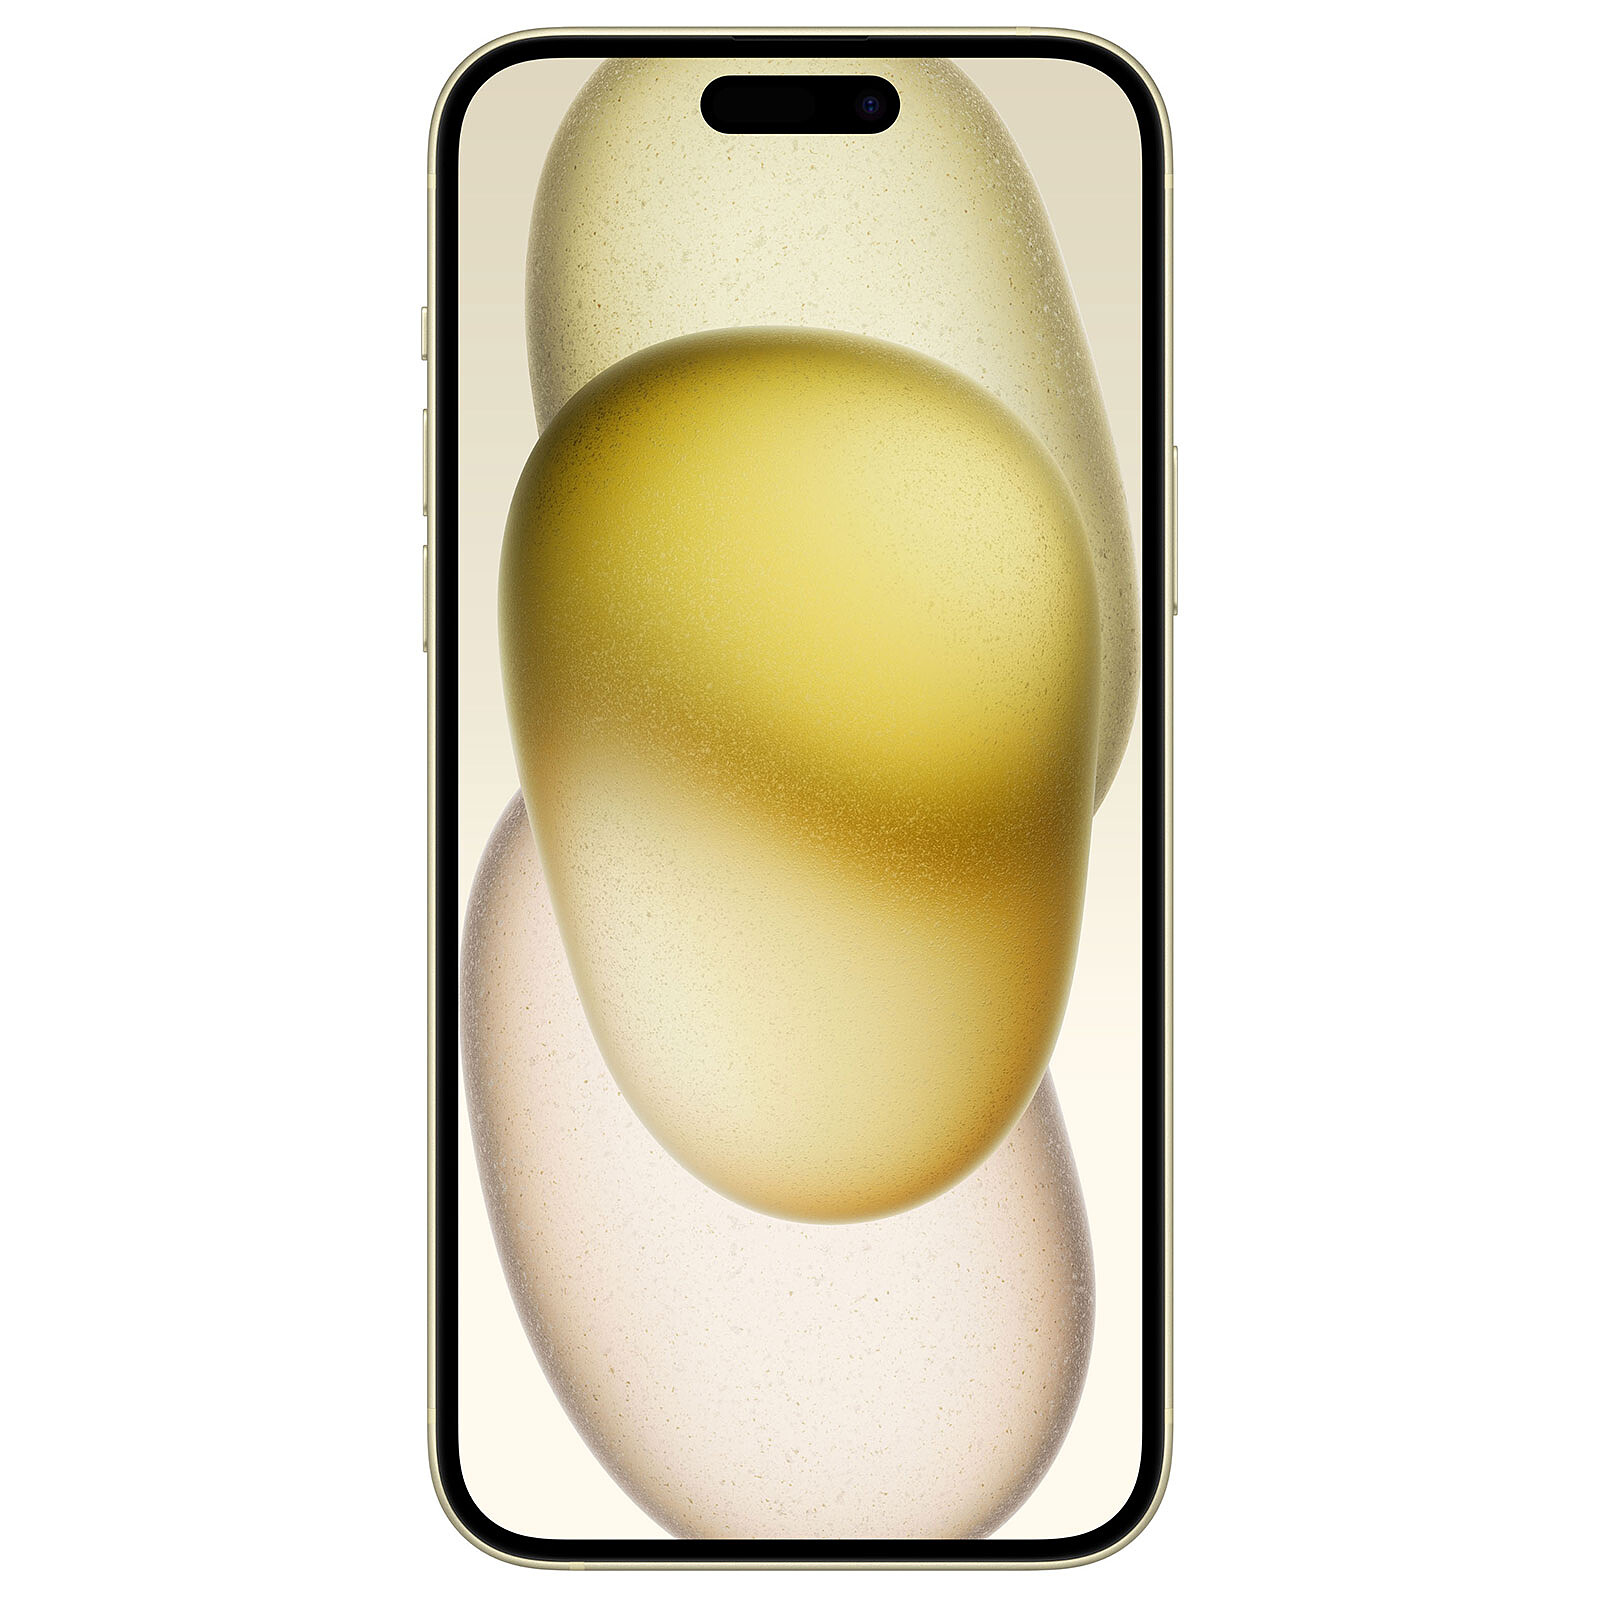 15 Apple 512GB iPhone LDLC Mobile - 3-year Yellow Plus smartphone phone & warranty -